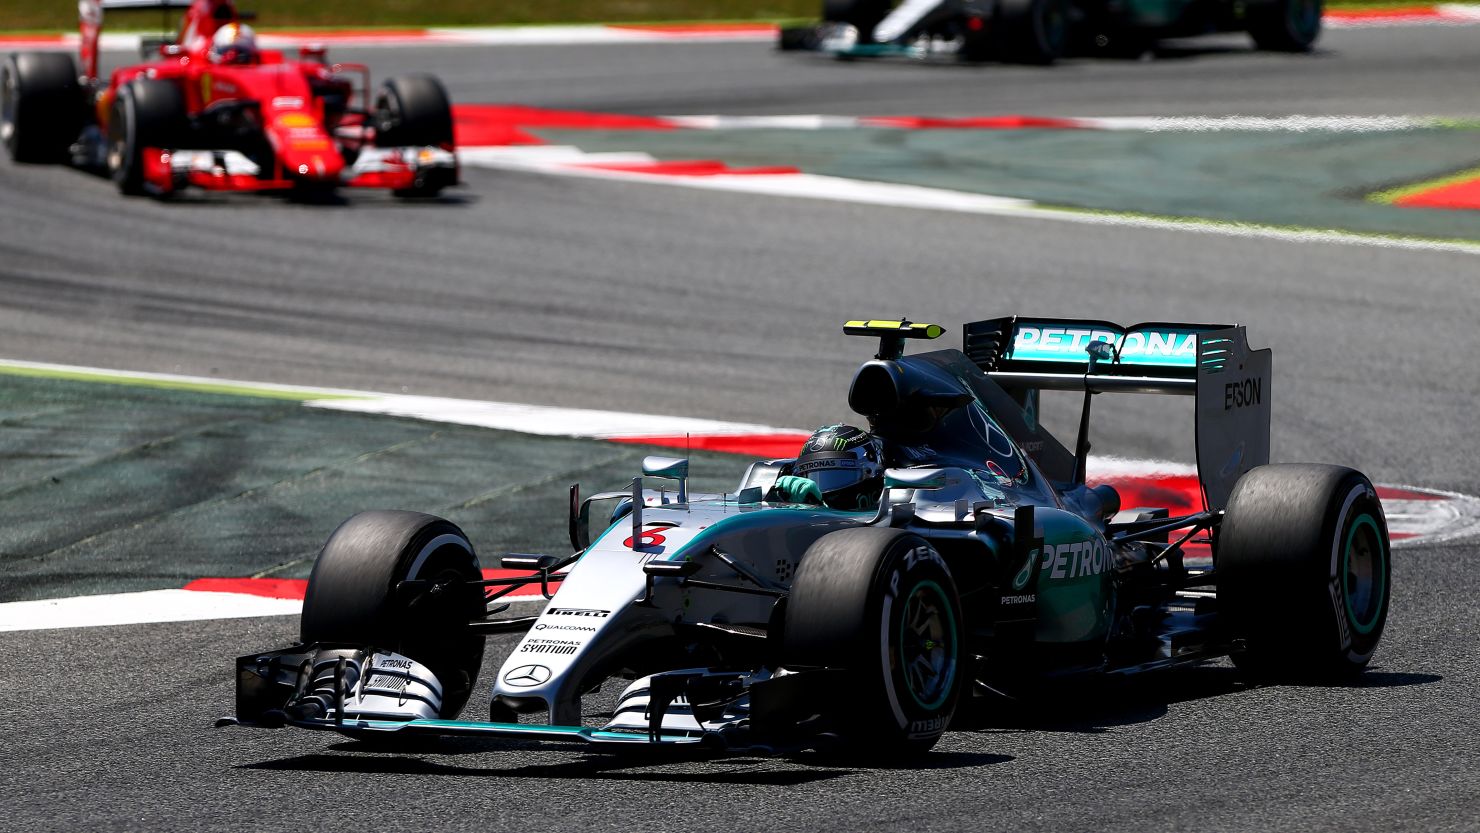 Nico Rosberg pulls clear of Ferrari's Sebastian Vettel and Mercedes teammate Lewis Hamilton in the opening laps.